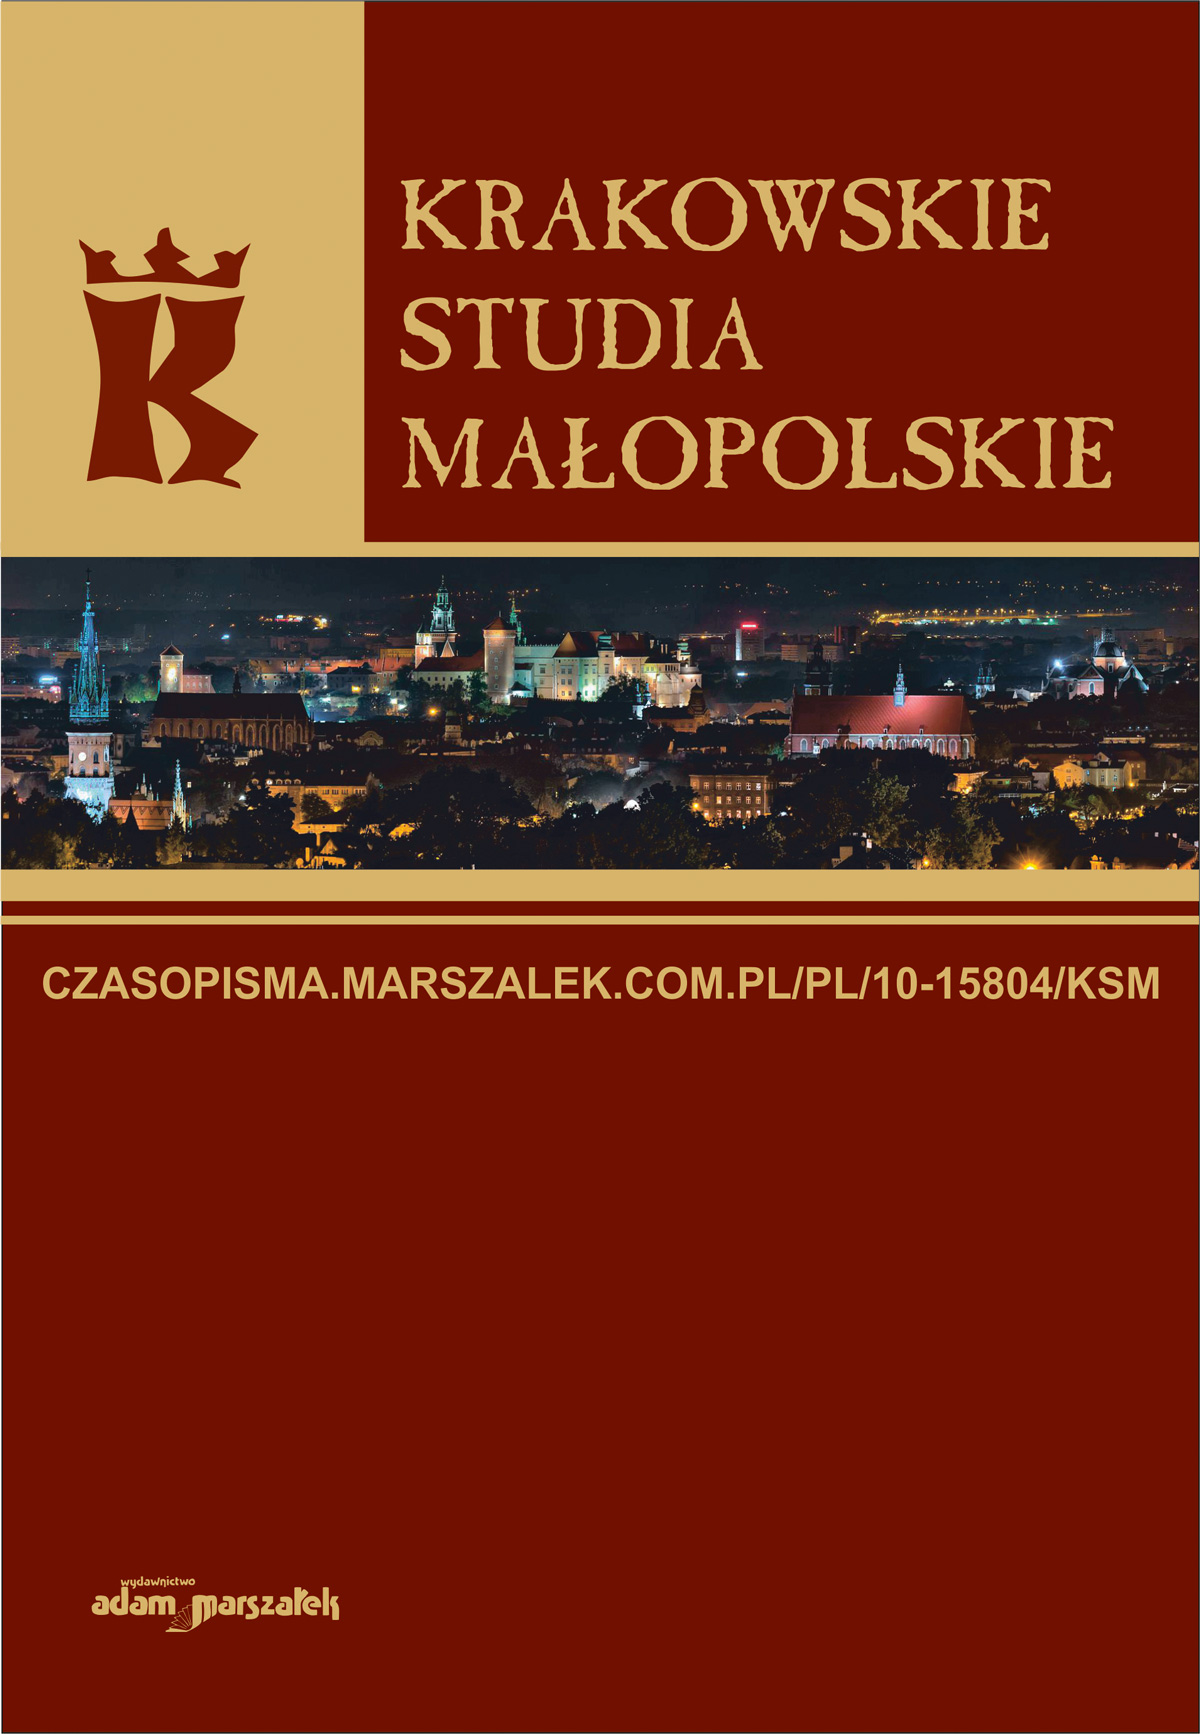 Cracow Lesser Poland Studies